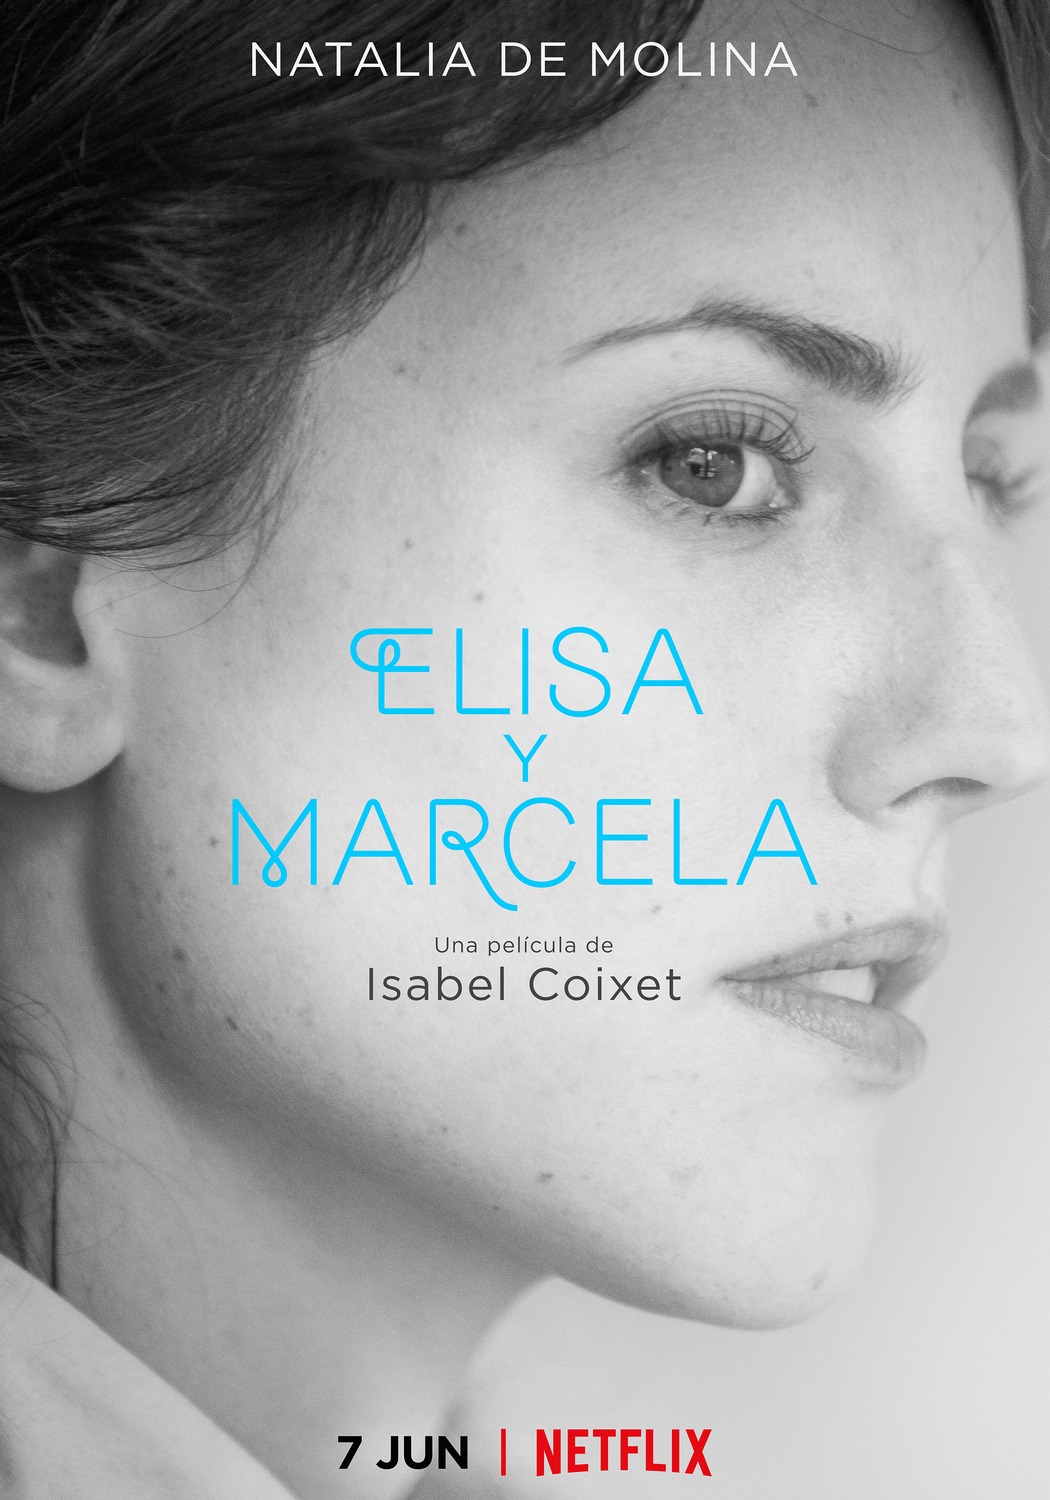 Extra Large TV Poster Image for Elisa y Marcela (#3 of 3)